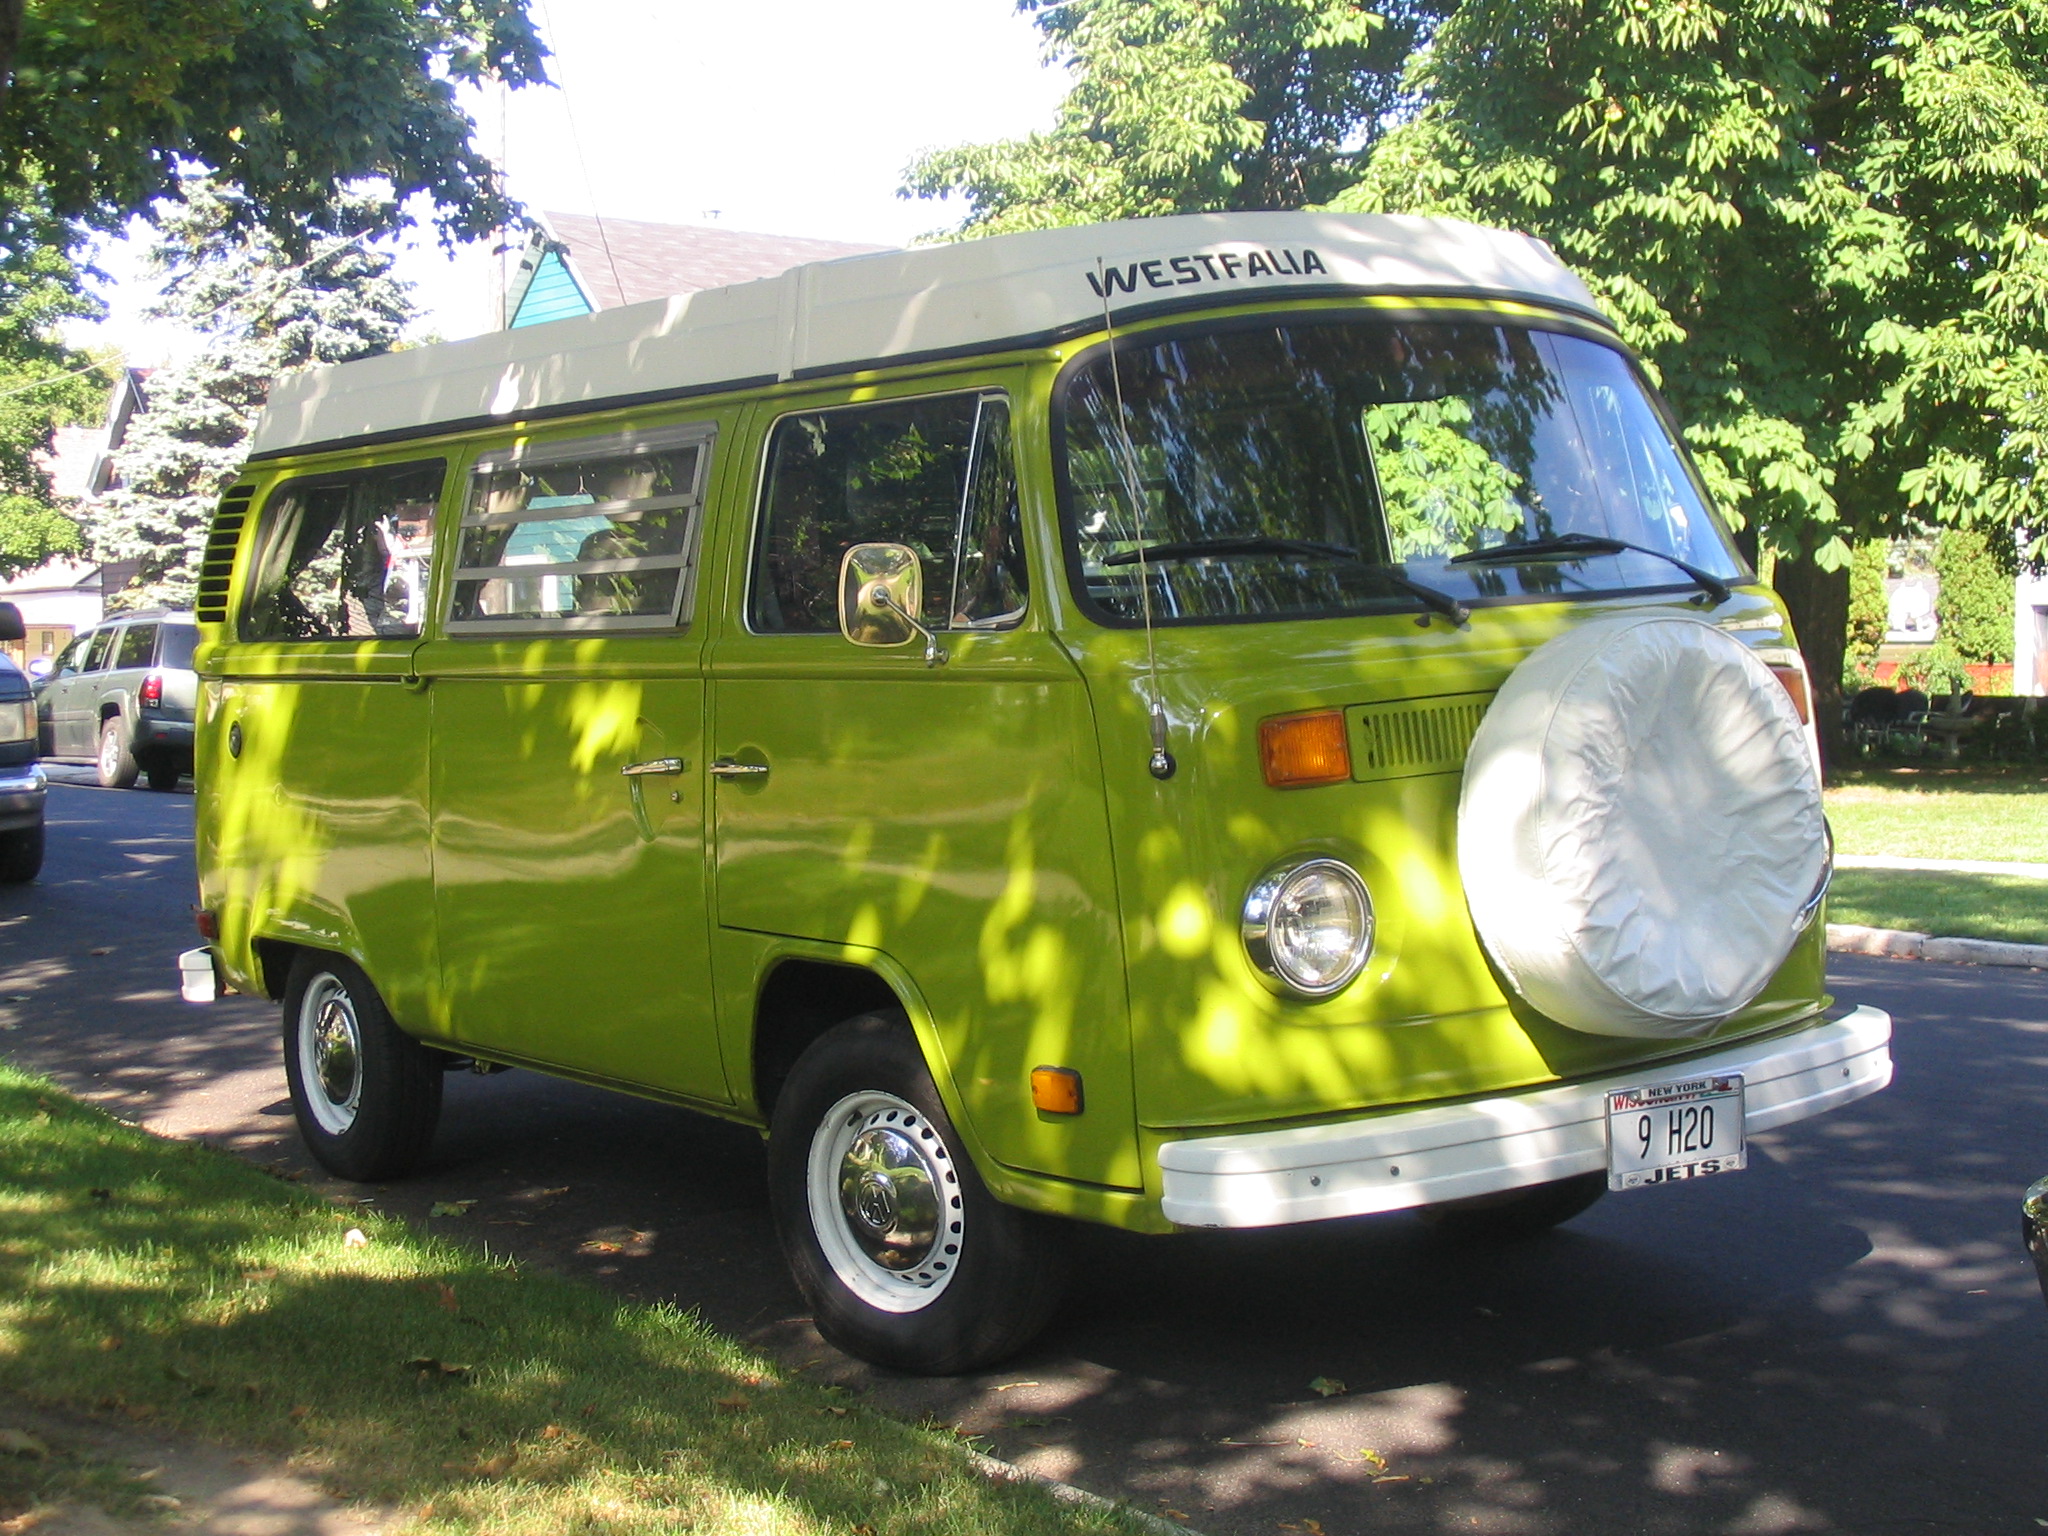 1979 Volkswagen Westfalia camper | Flickr - Photo Sharing!